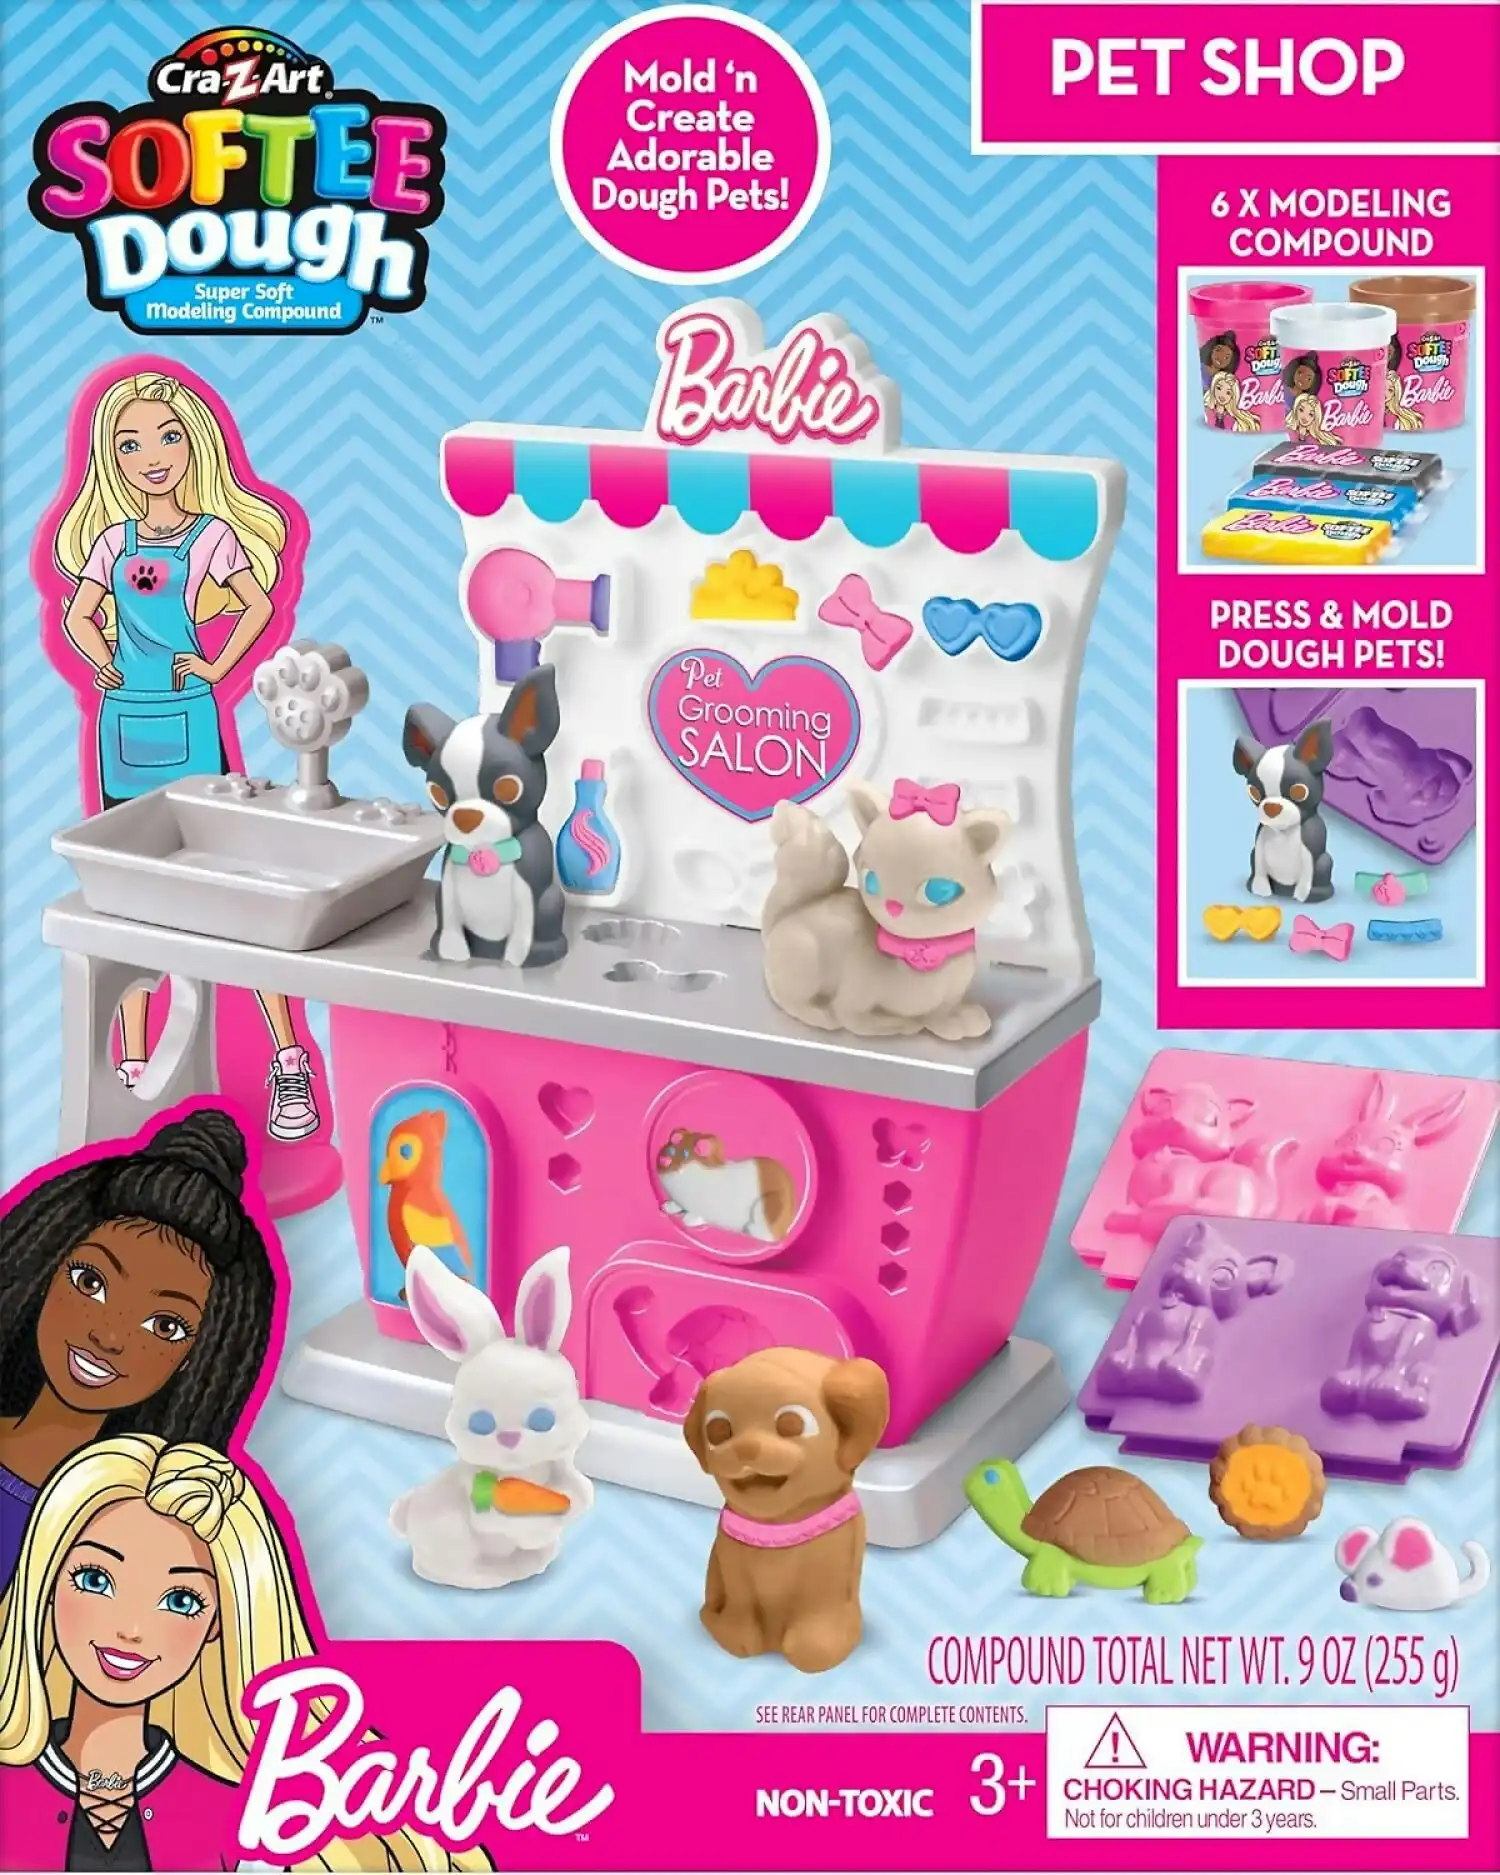 CRA-Z-ART - Barbie Softee Dough Pet Shop